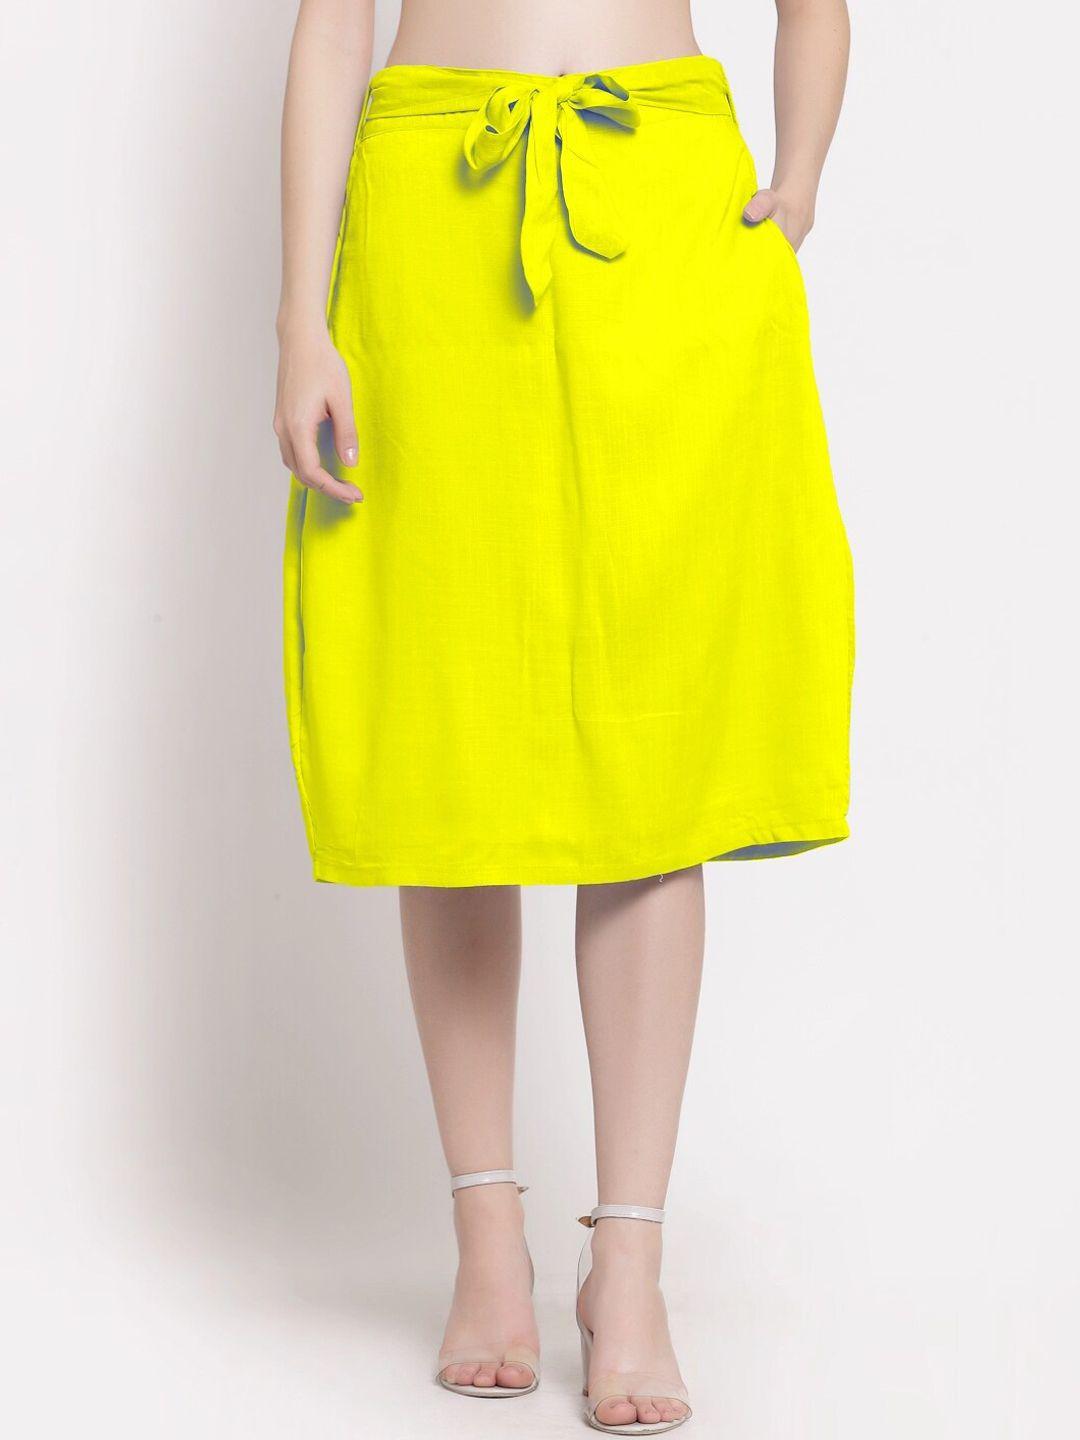 patrorna women plus size yellow a-line skirt